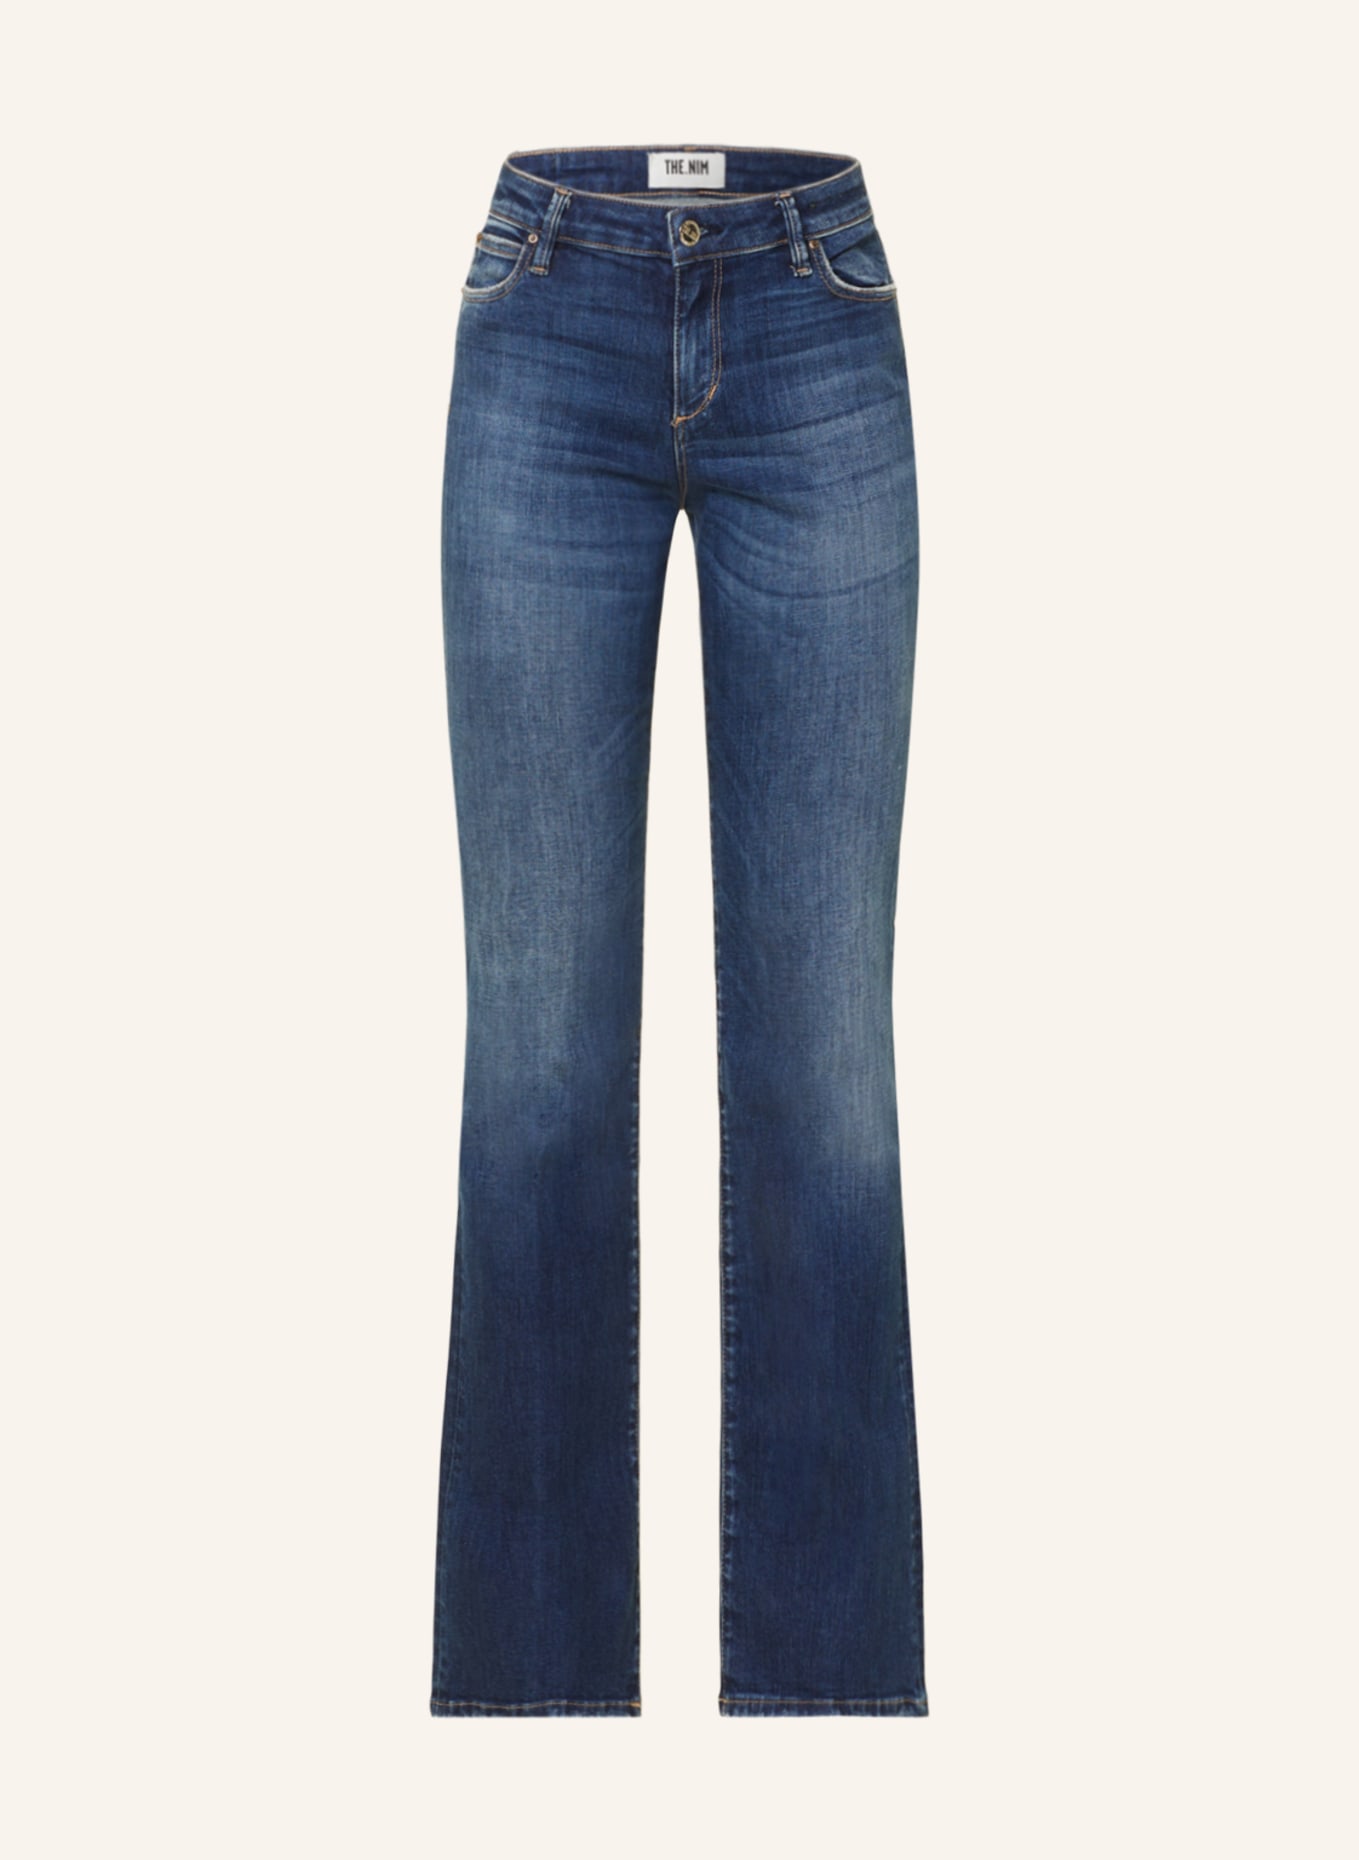 THE.NIM STANDARD Bootcut Jeans TRACY, Farbe: W799-NIB DARK WASHE BLUE (Bild 1)